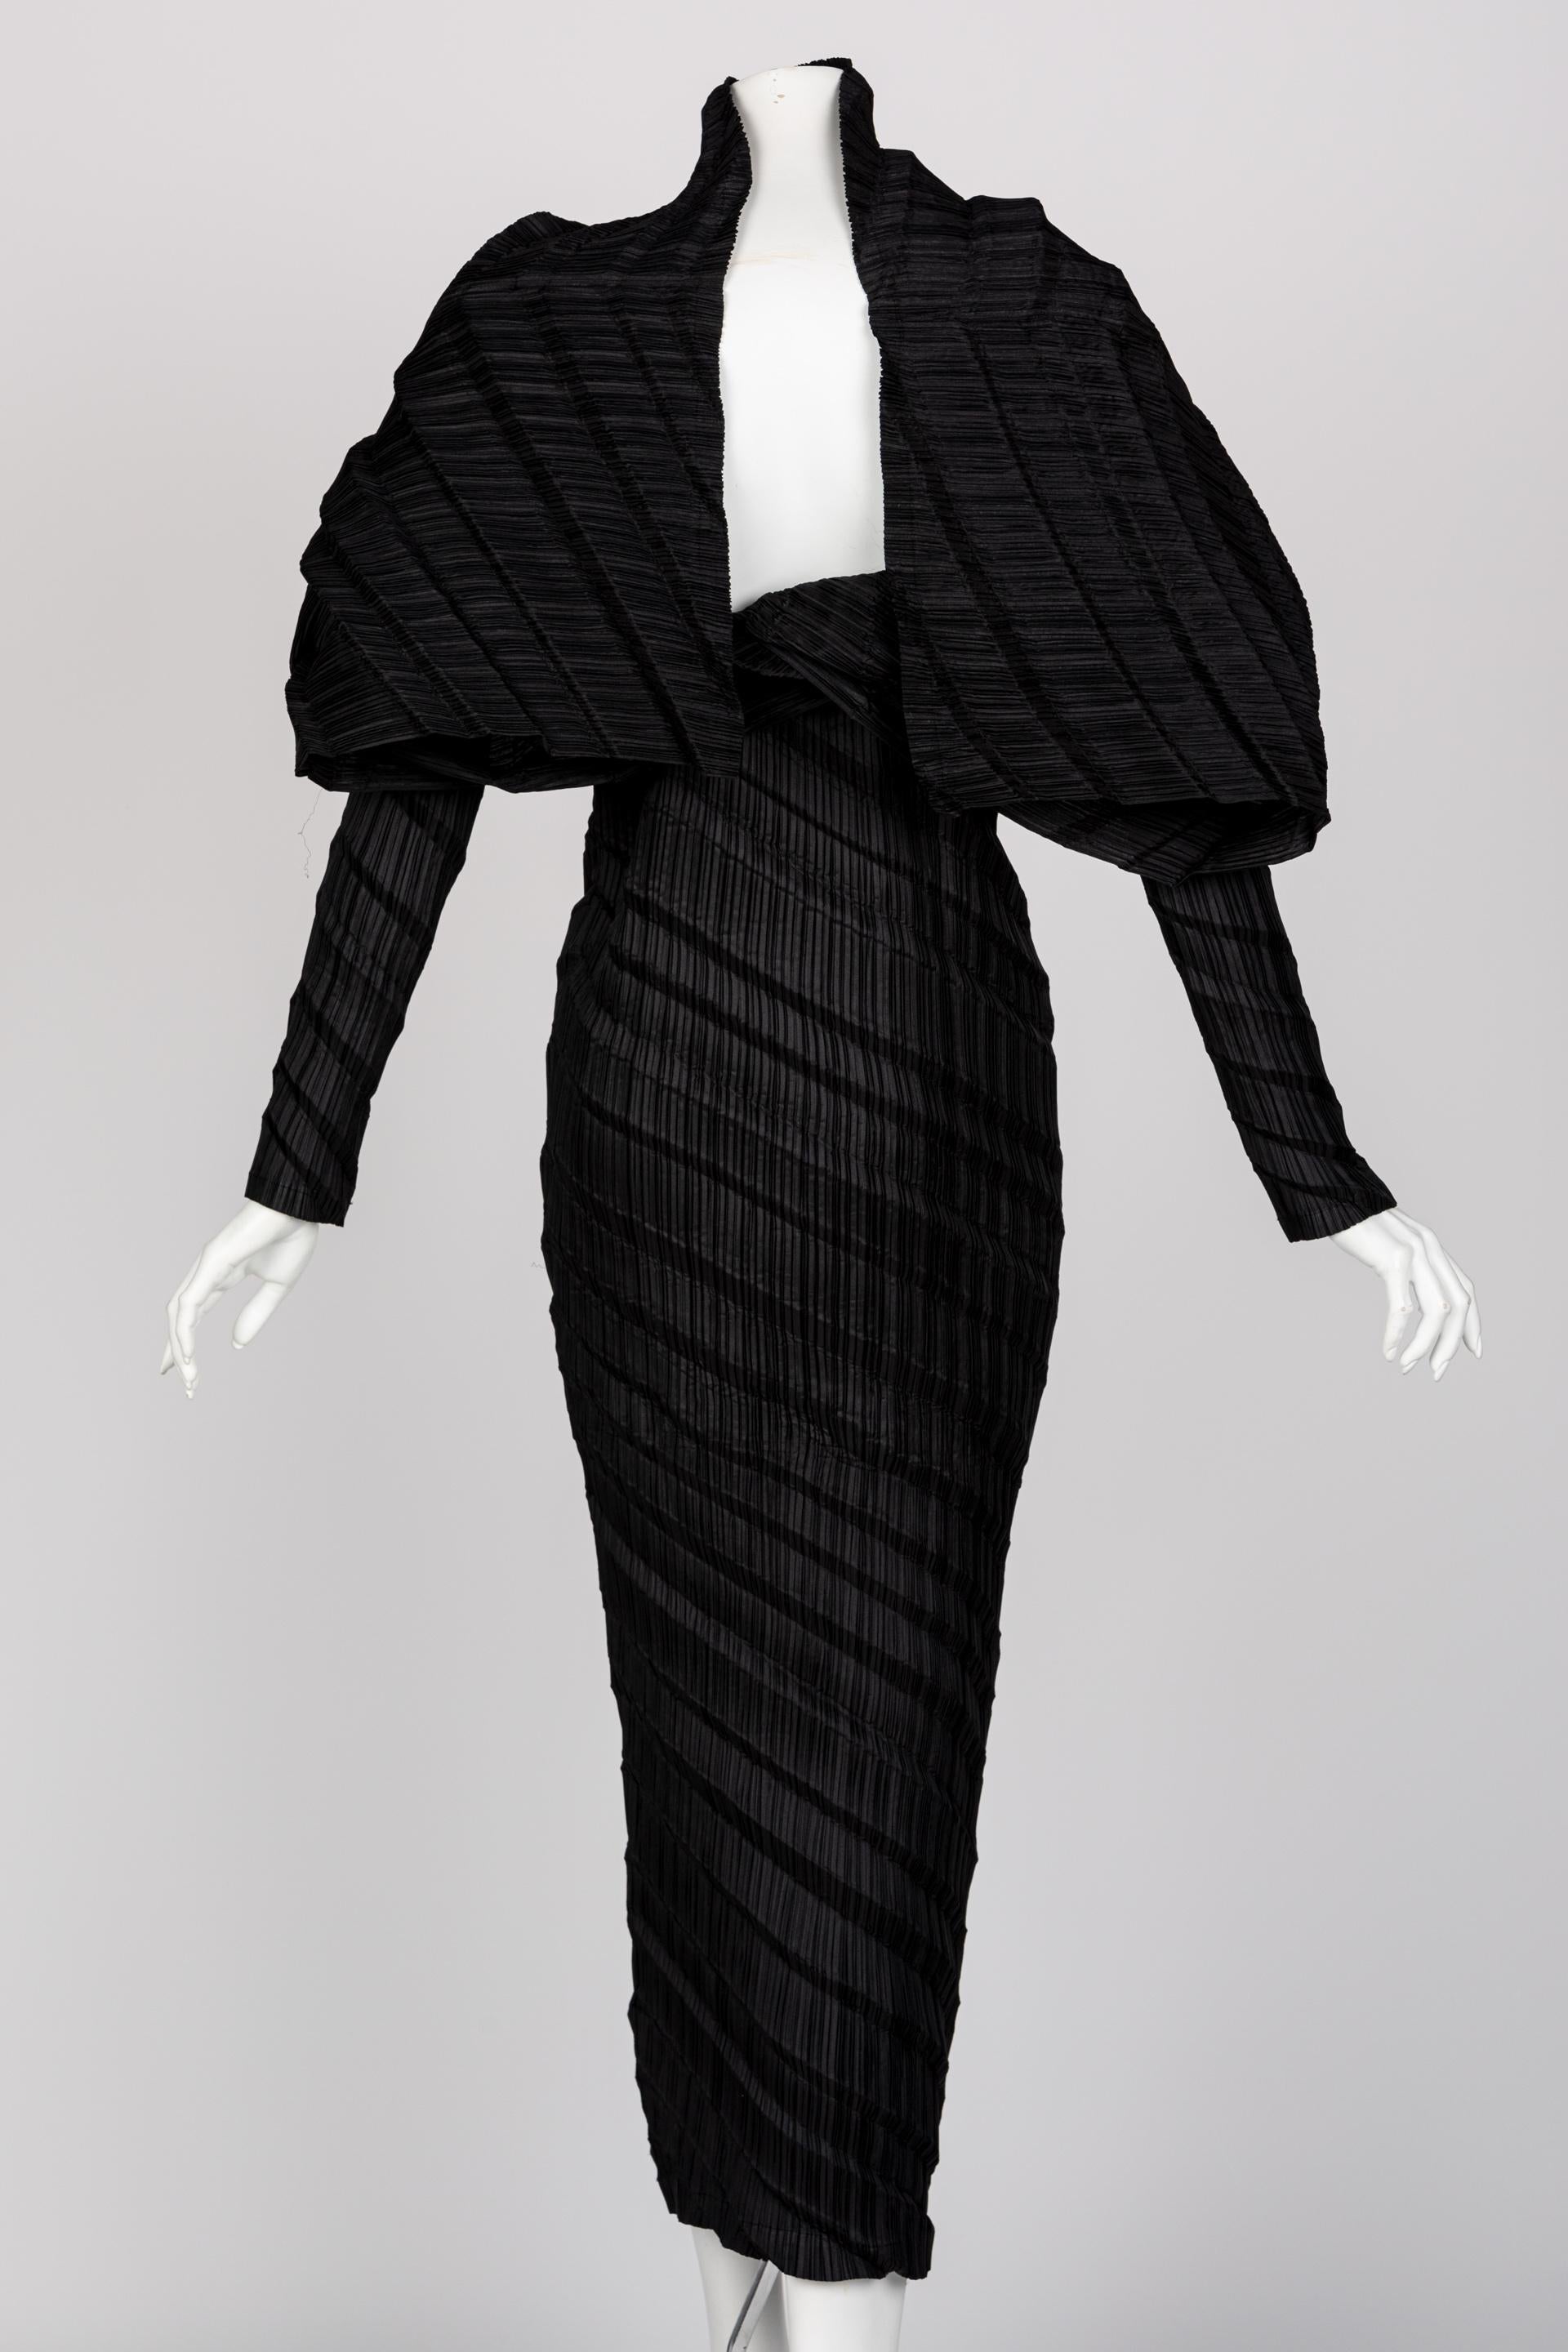 Issey Miyake Black Pleated Sculptural Dress, 1990s 1